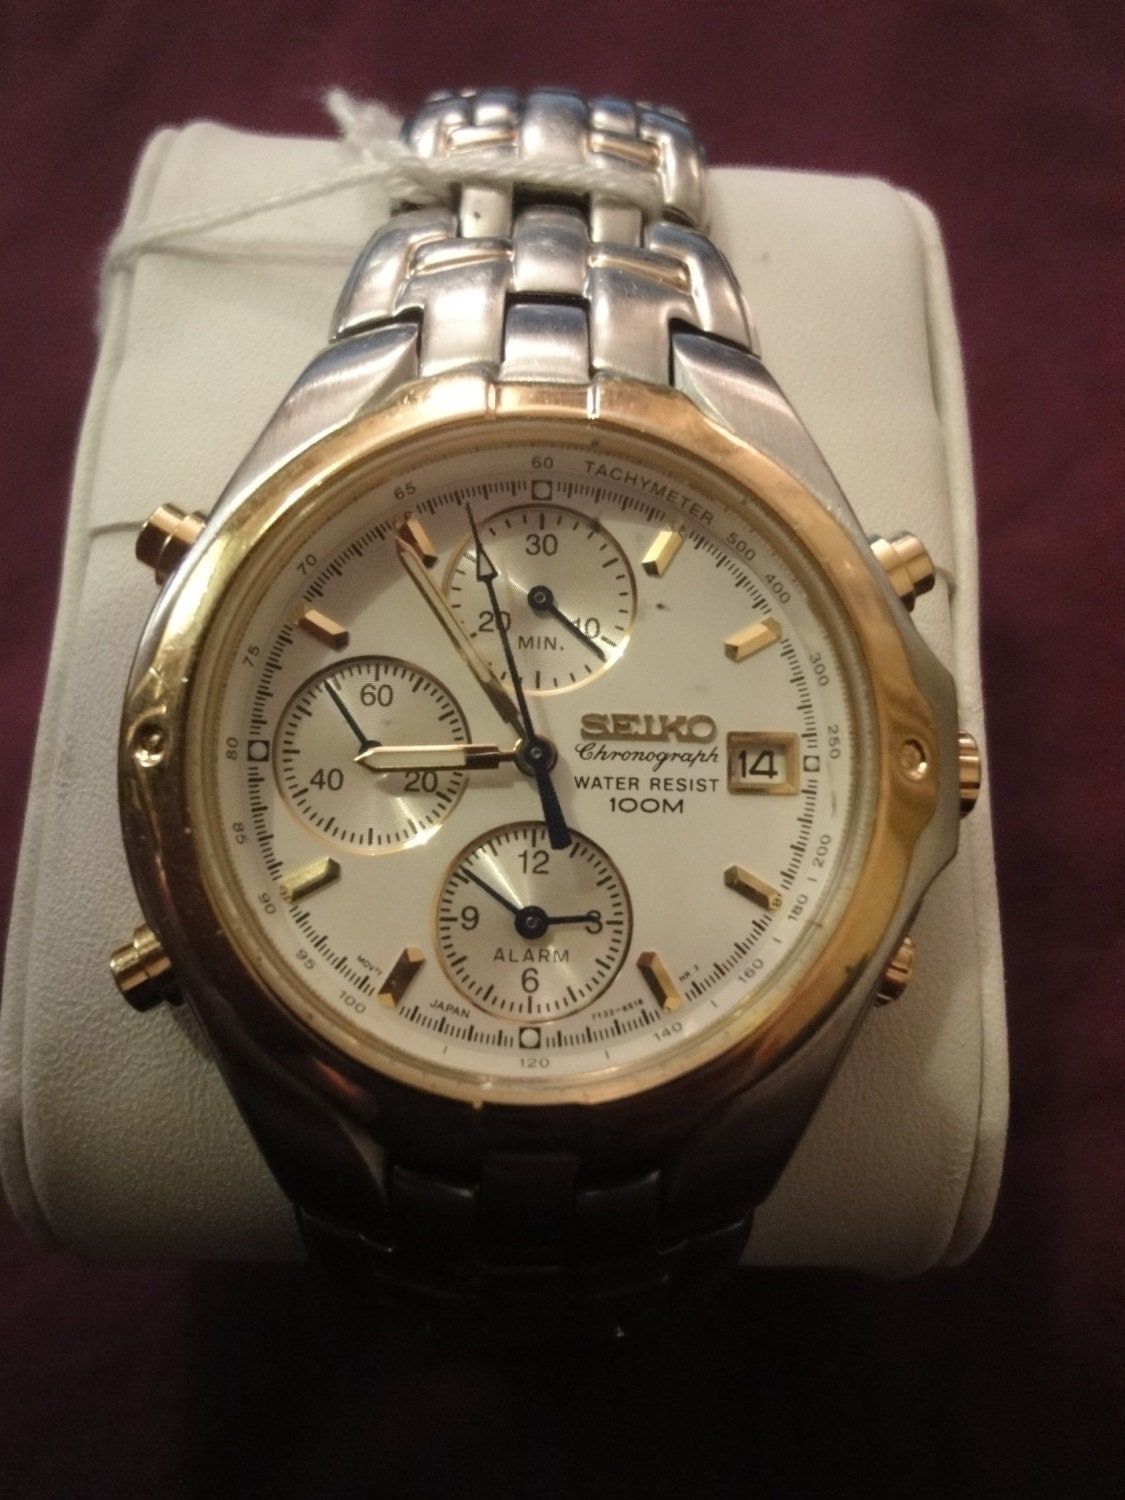 SEIKO Chronograph 7t92-6m90 quartz stainless steel watch VERY